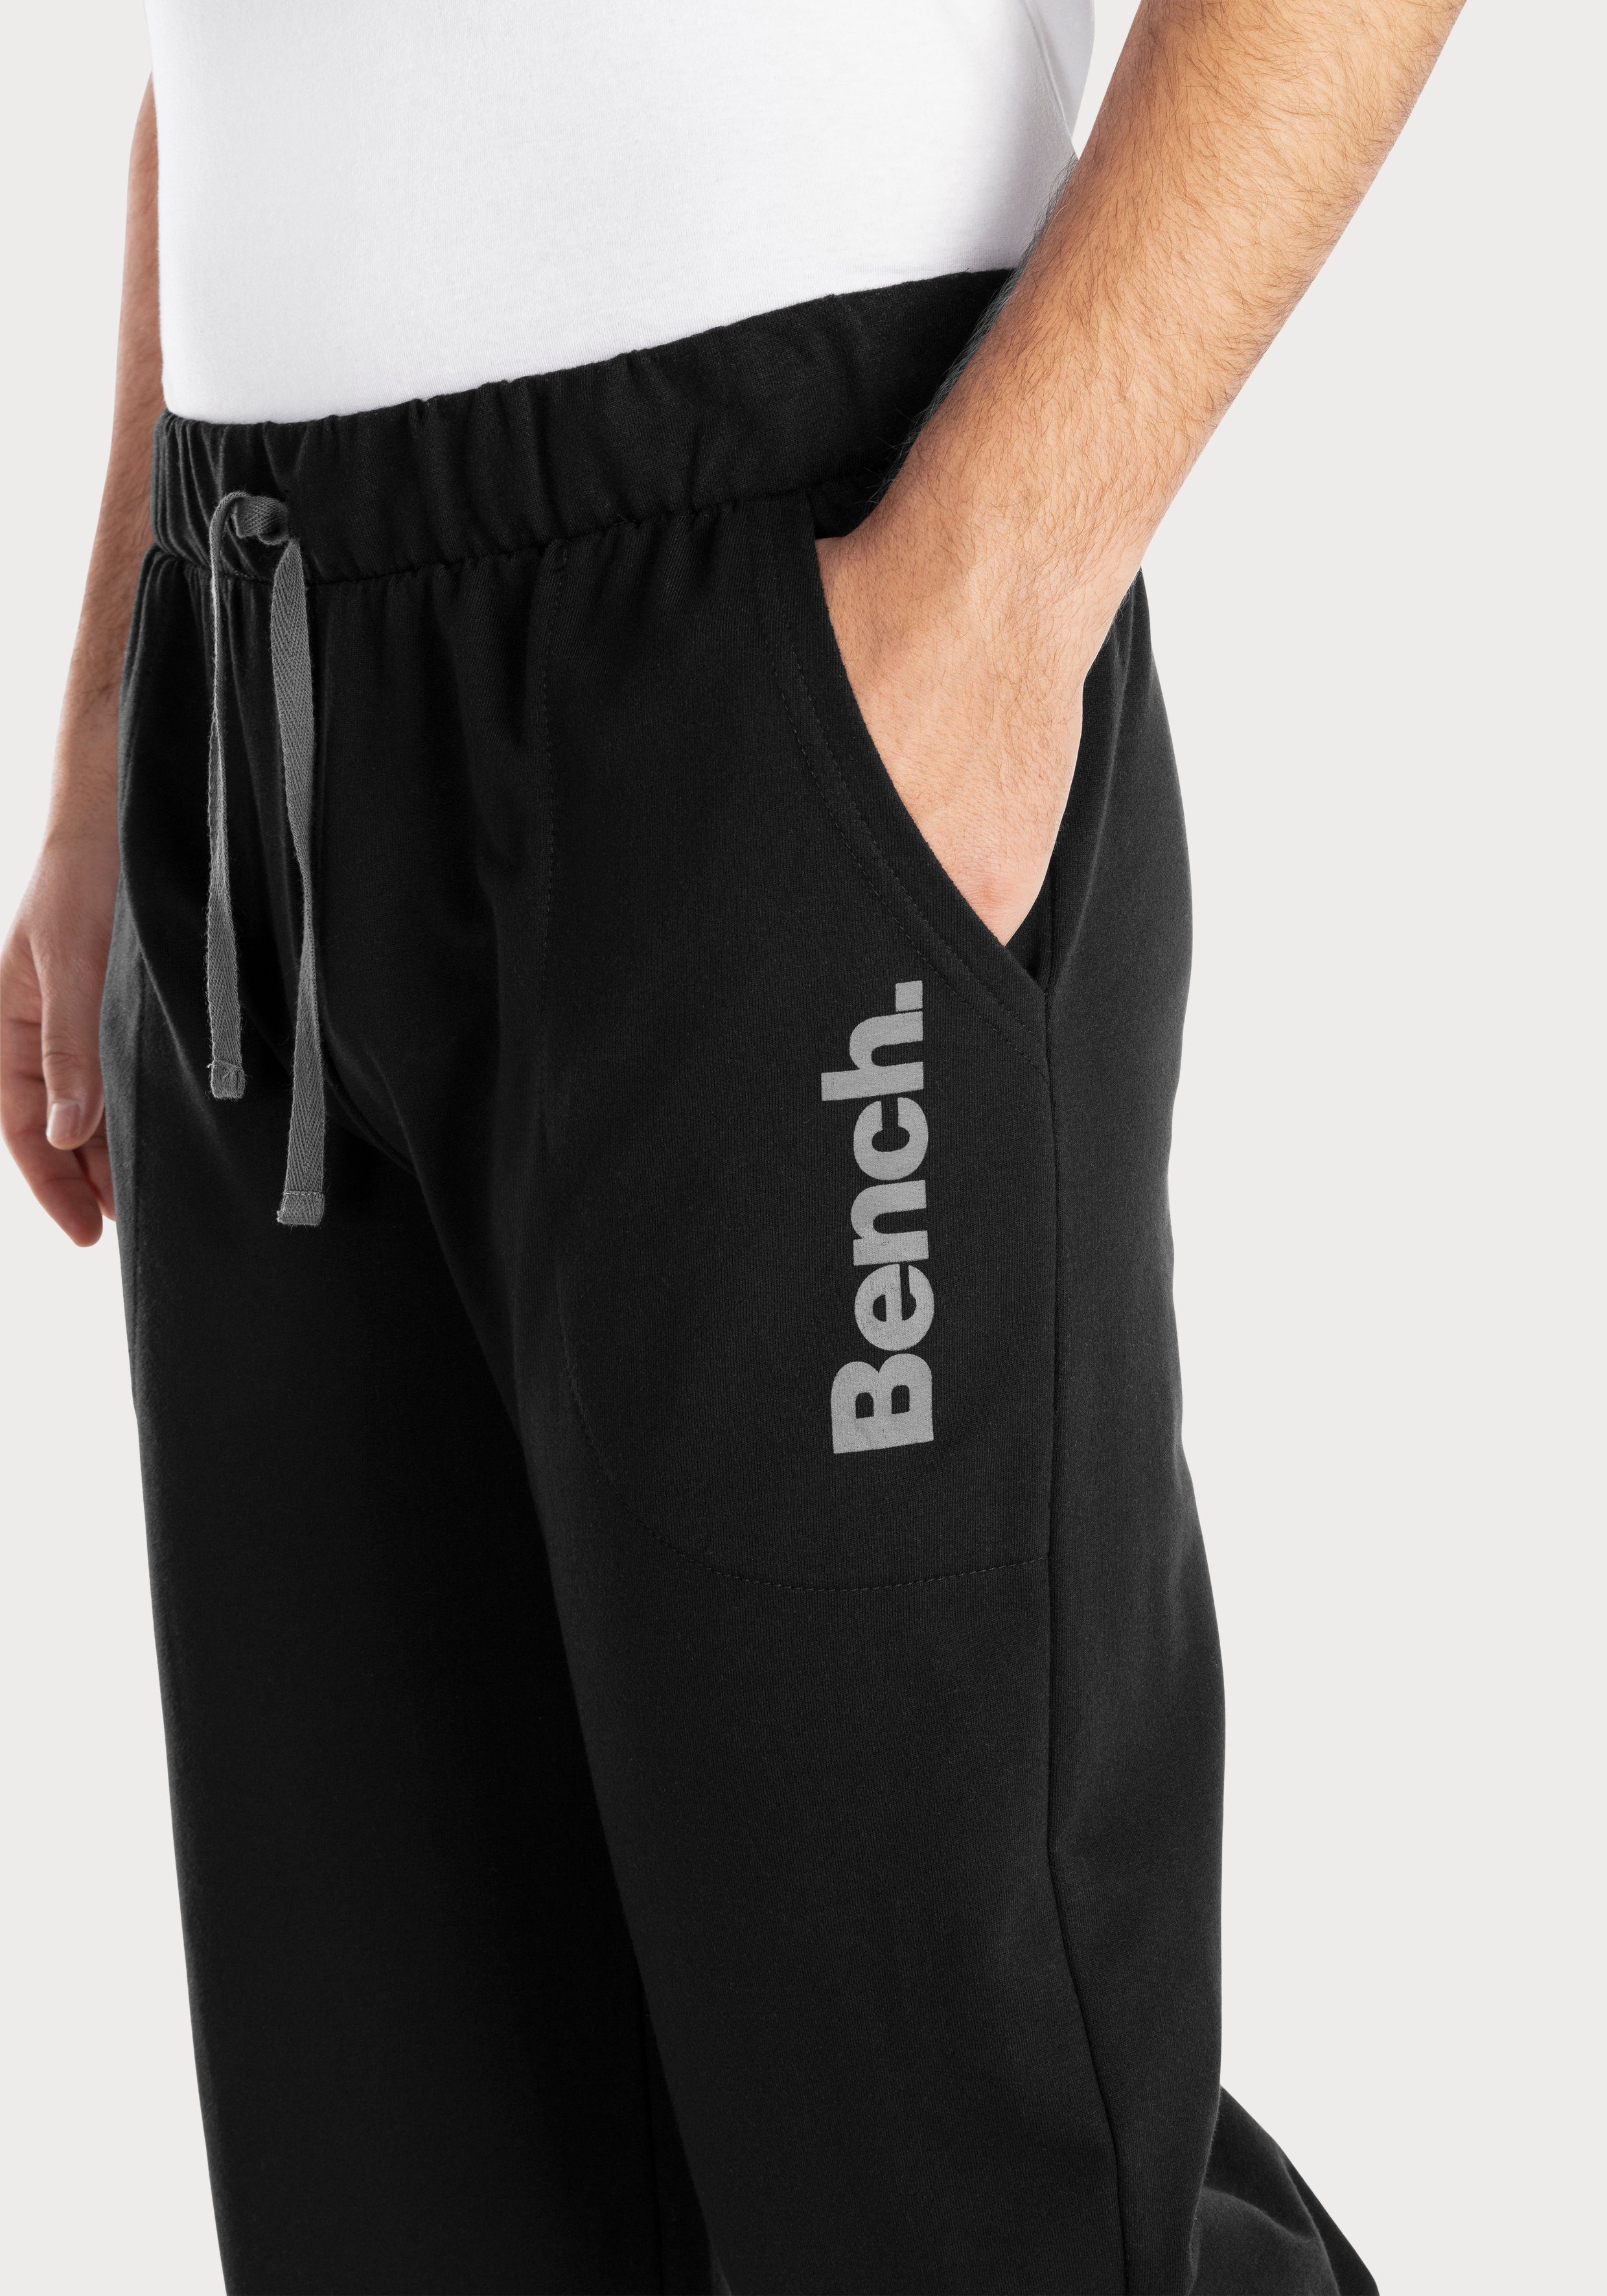 Bench. - Sweathose Sweathose mit Loungewear Logodruck schwarz